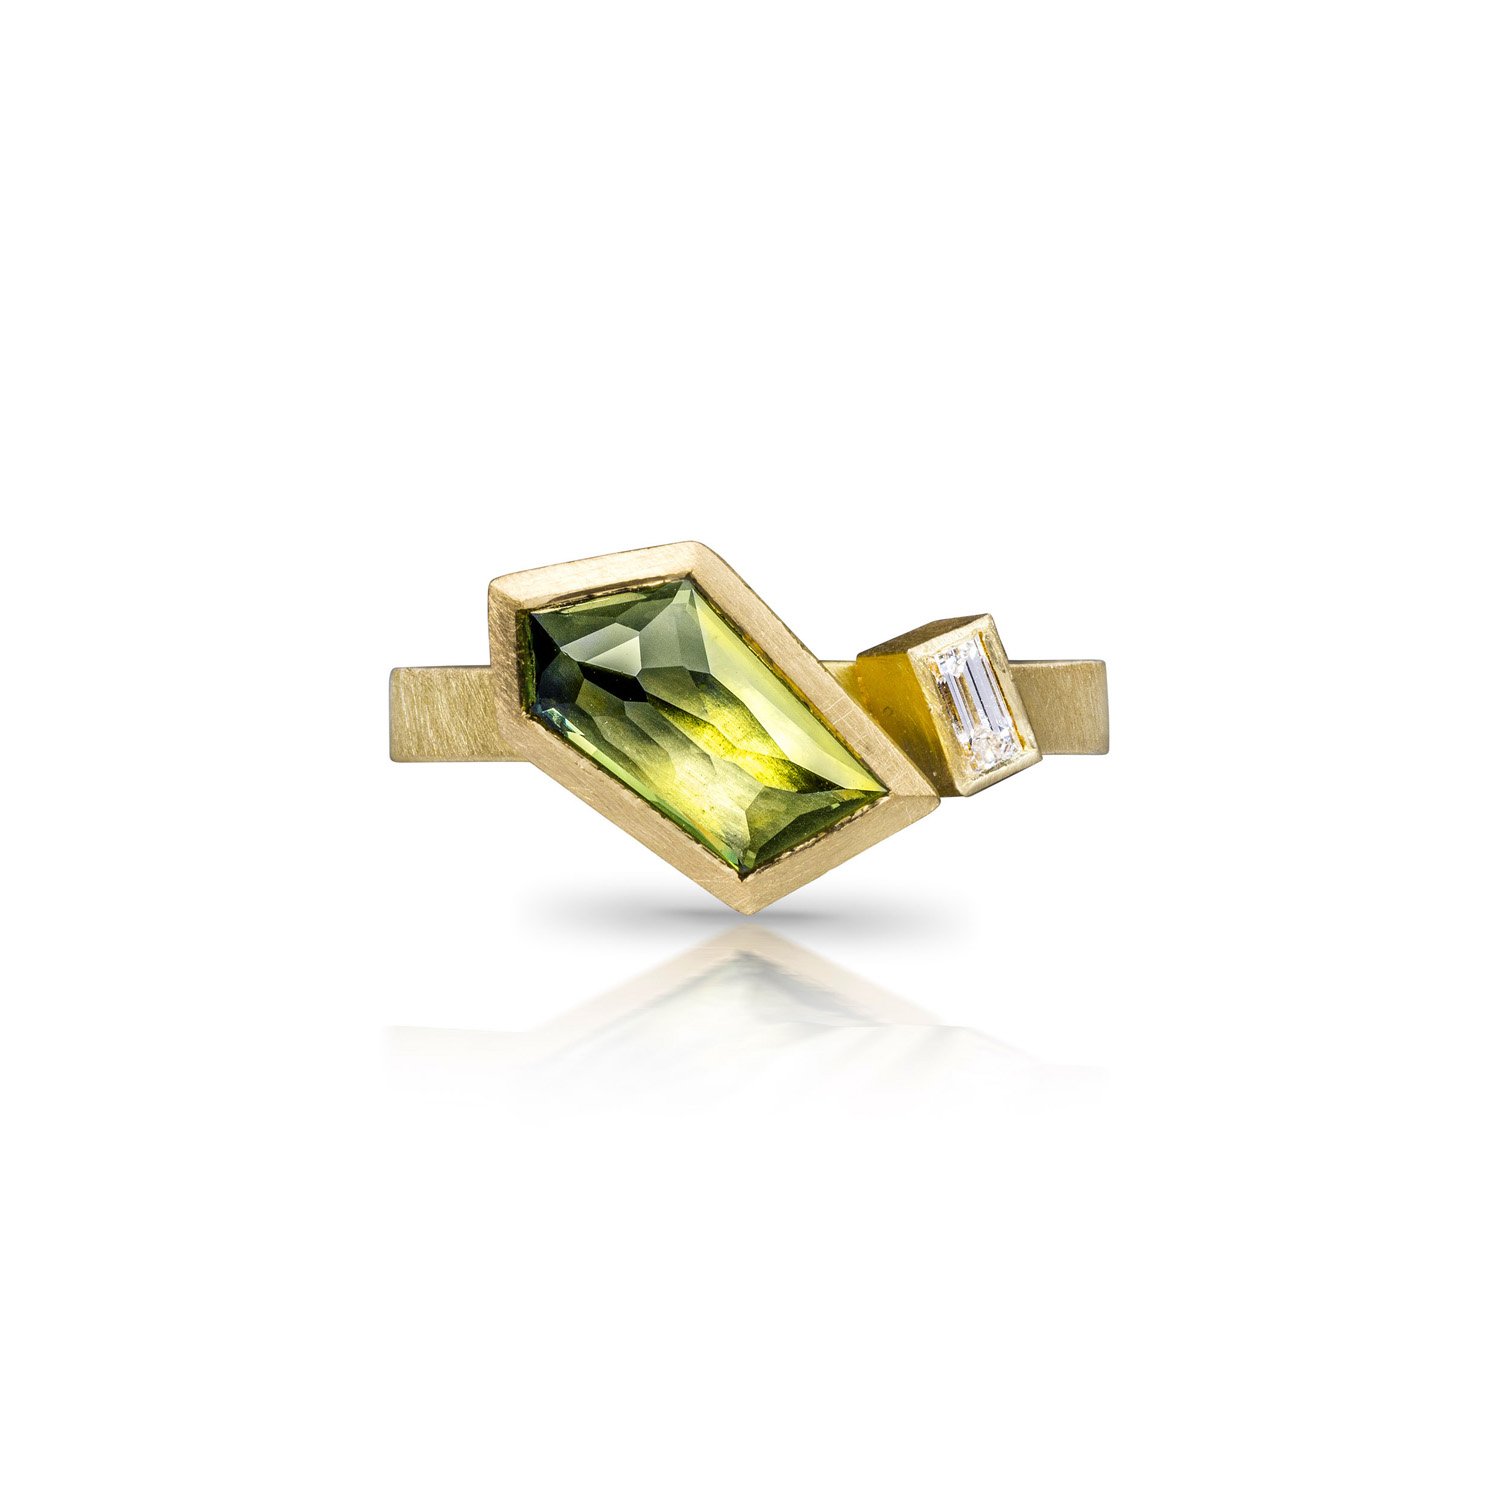 Green Sapphire Diamond Ring 18ct gold made UK sustainable